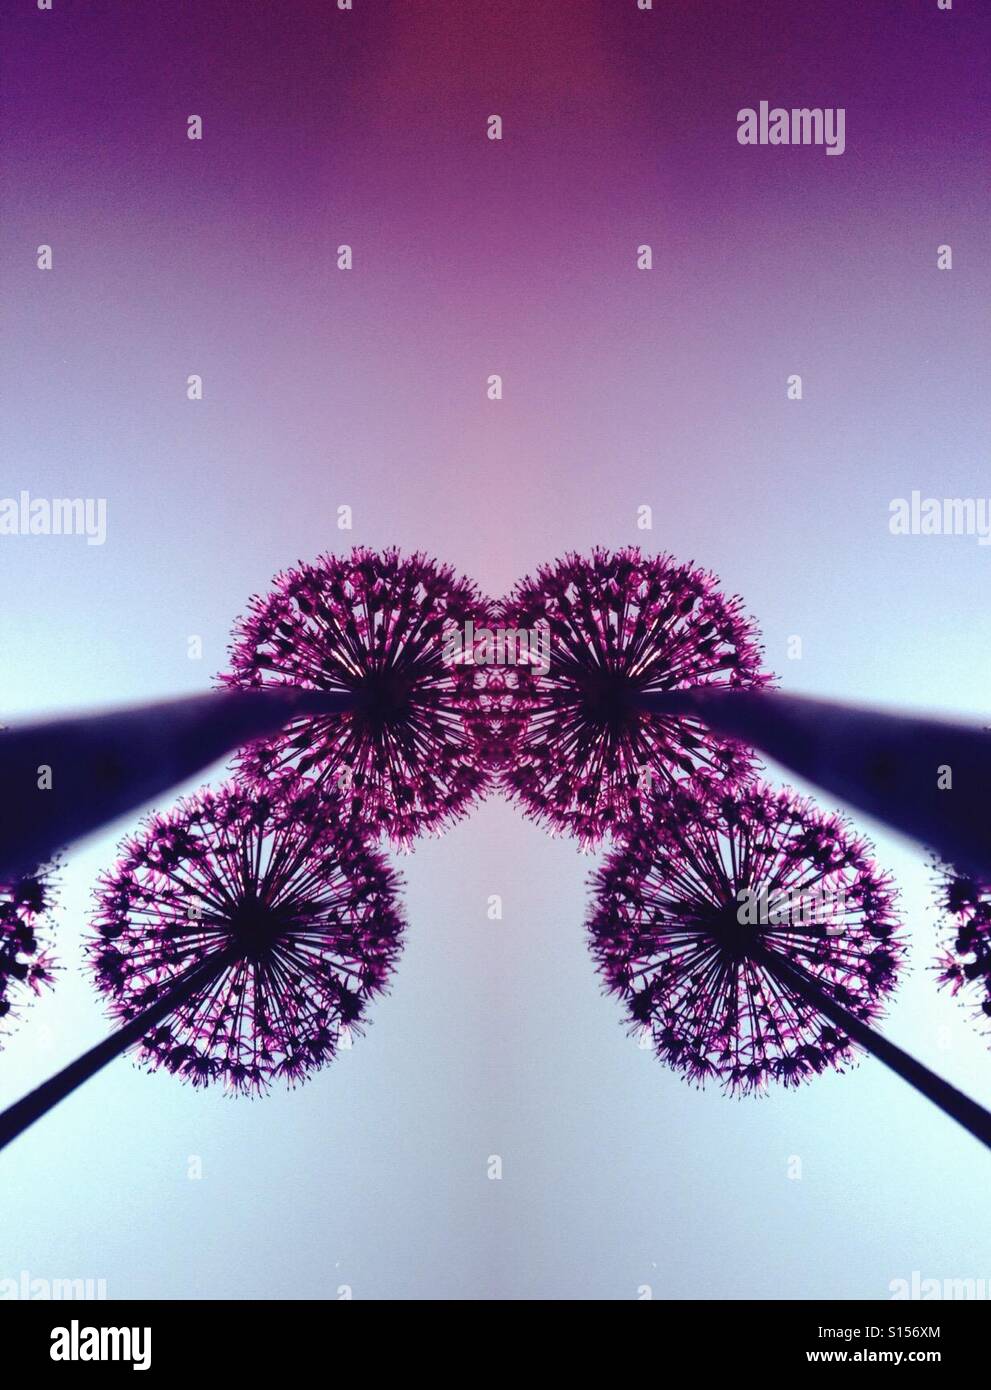 Symmetrical image of allium flowers Stock Photo